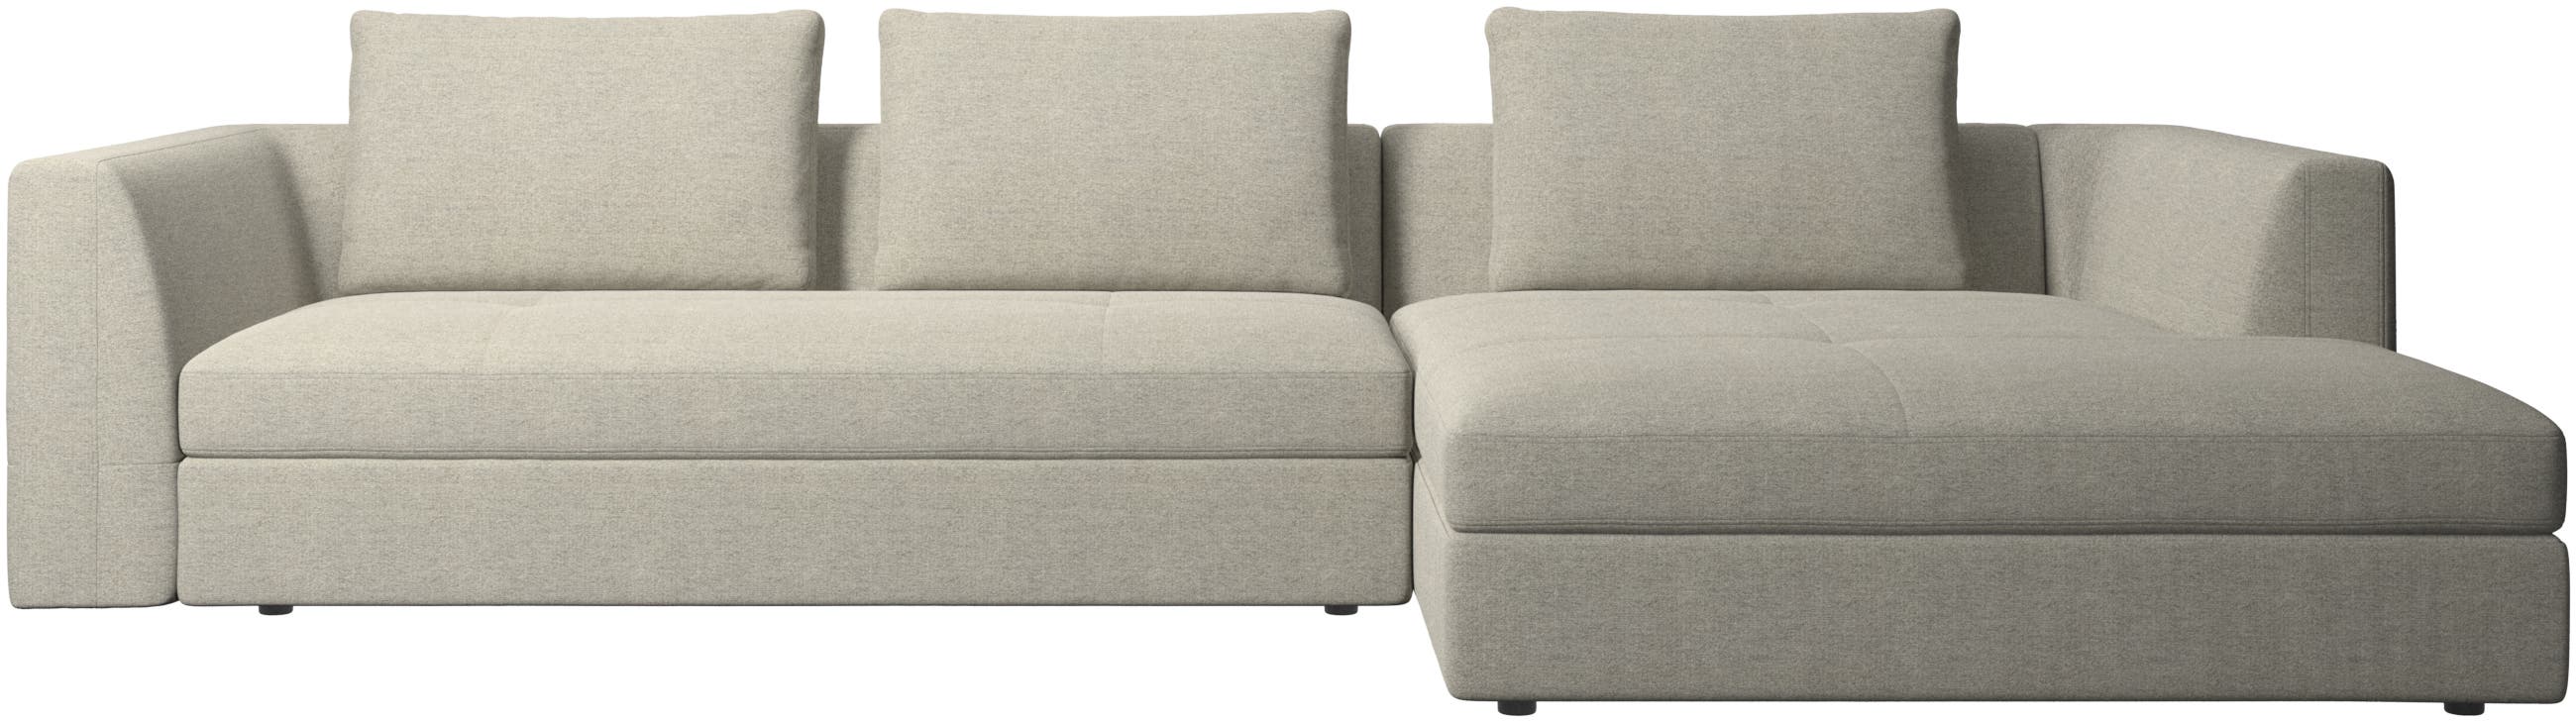 Bergamo sofa med hvilemodul